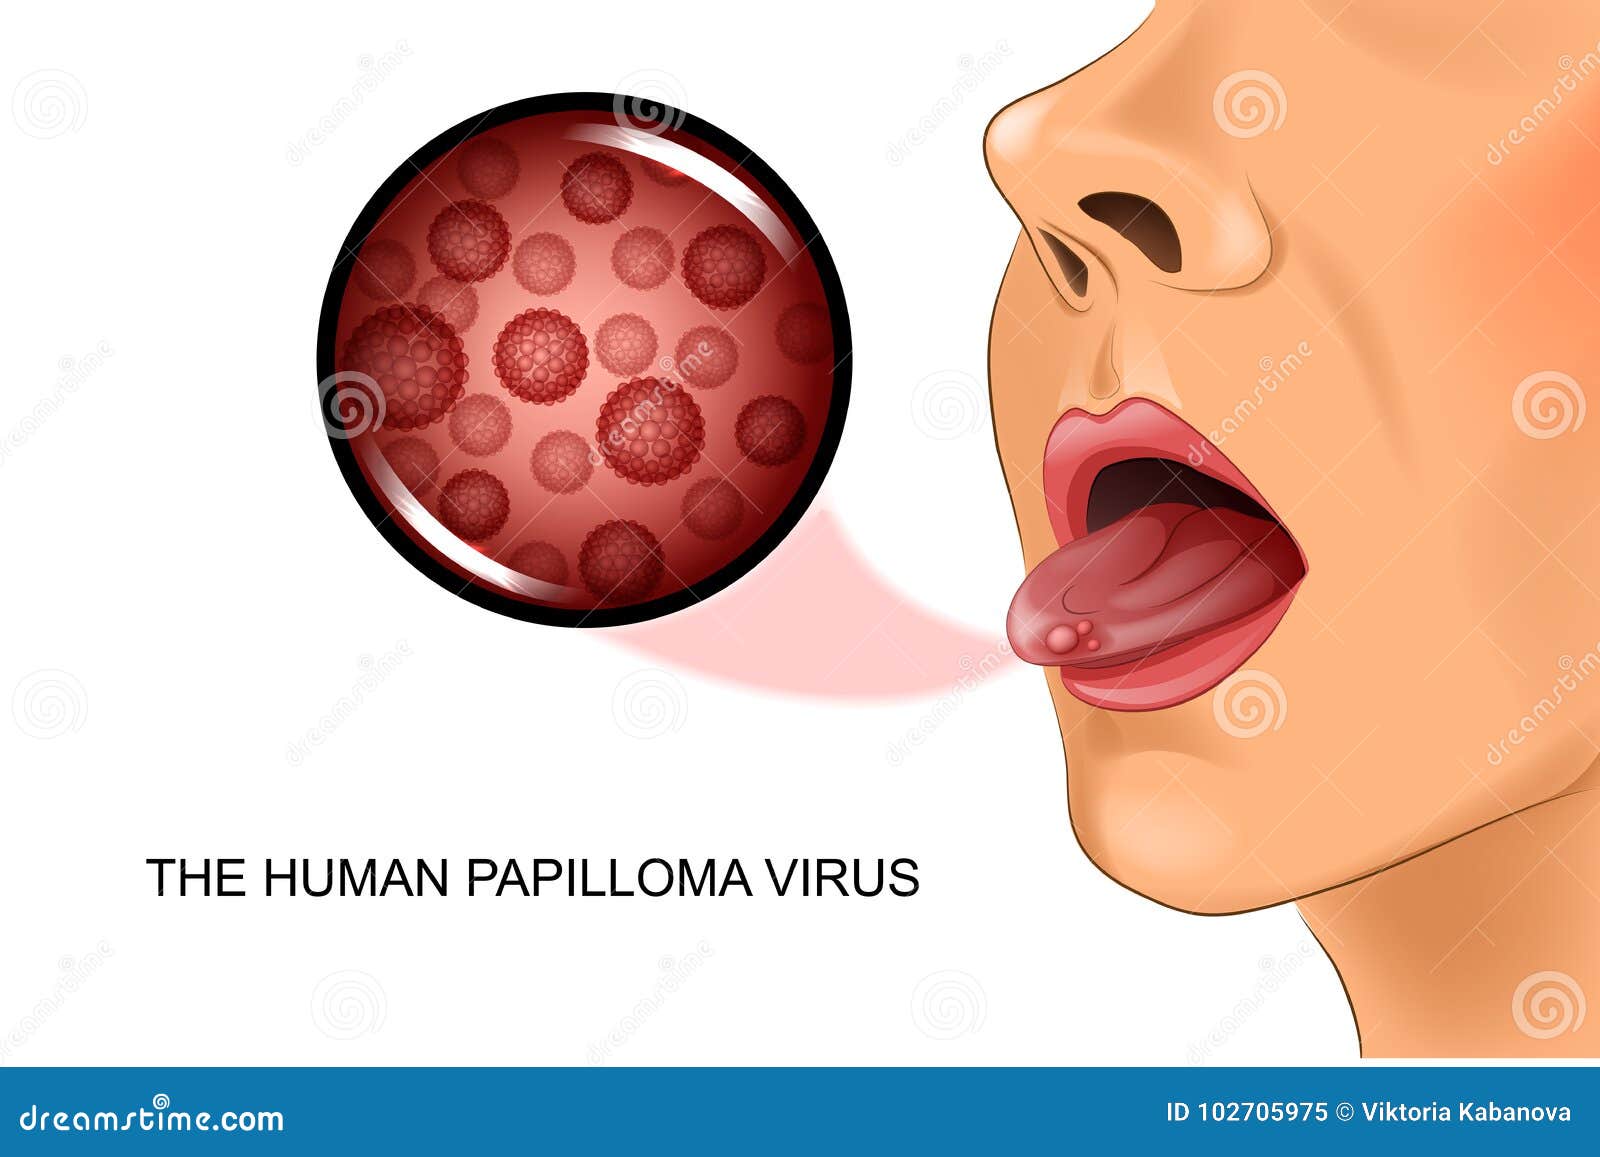 papillomavirus langue symptomes)